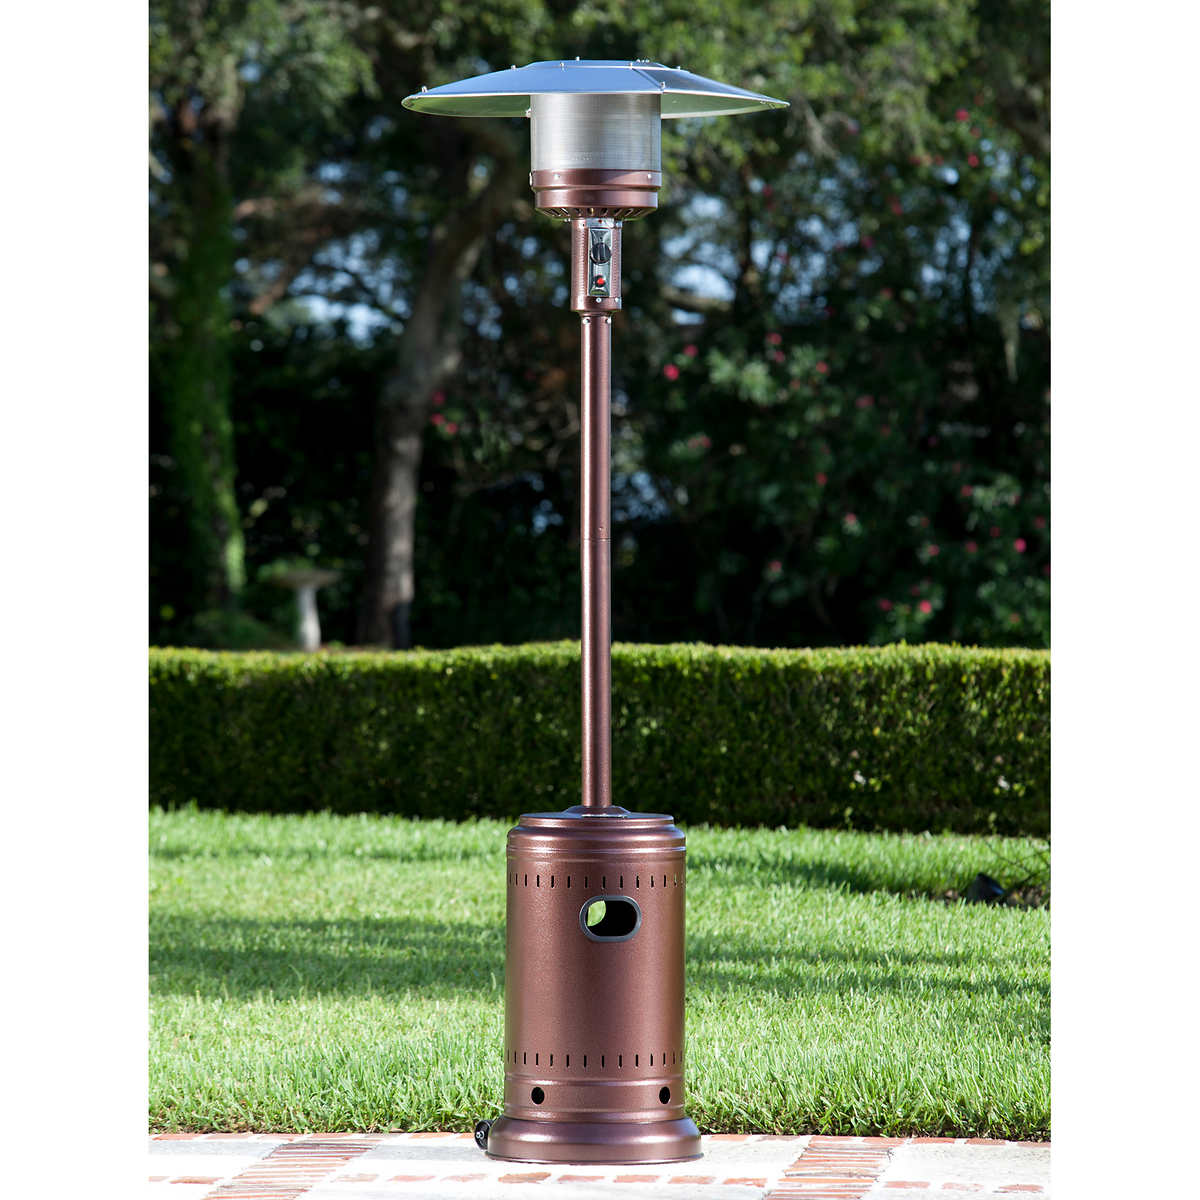 Paramount Bronze Propane Patio Heater, Paramount Venturi Spiral Flame Propane Patio Heater Costco